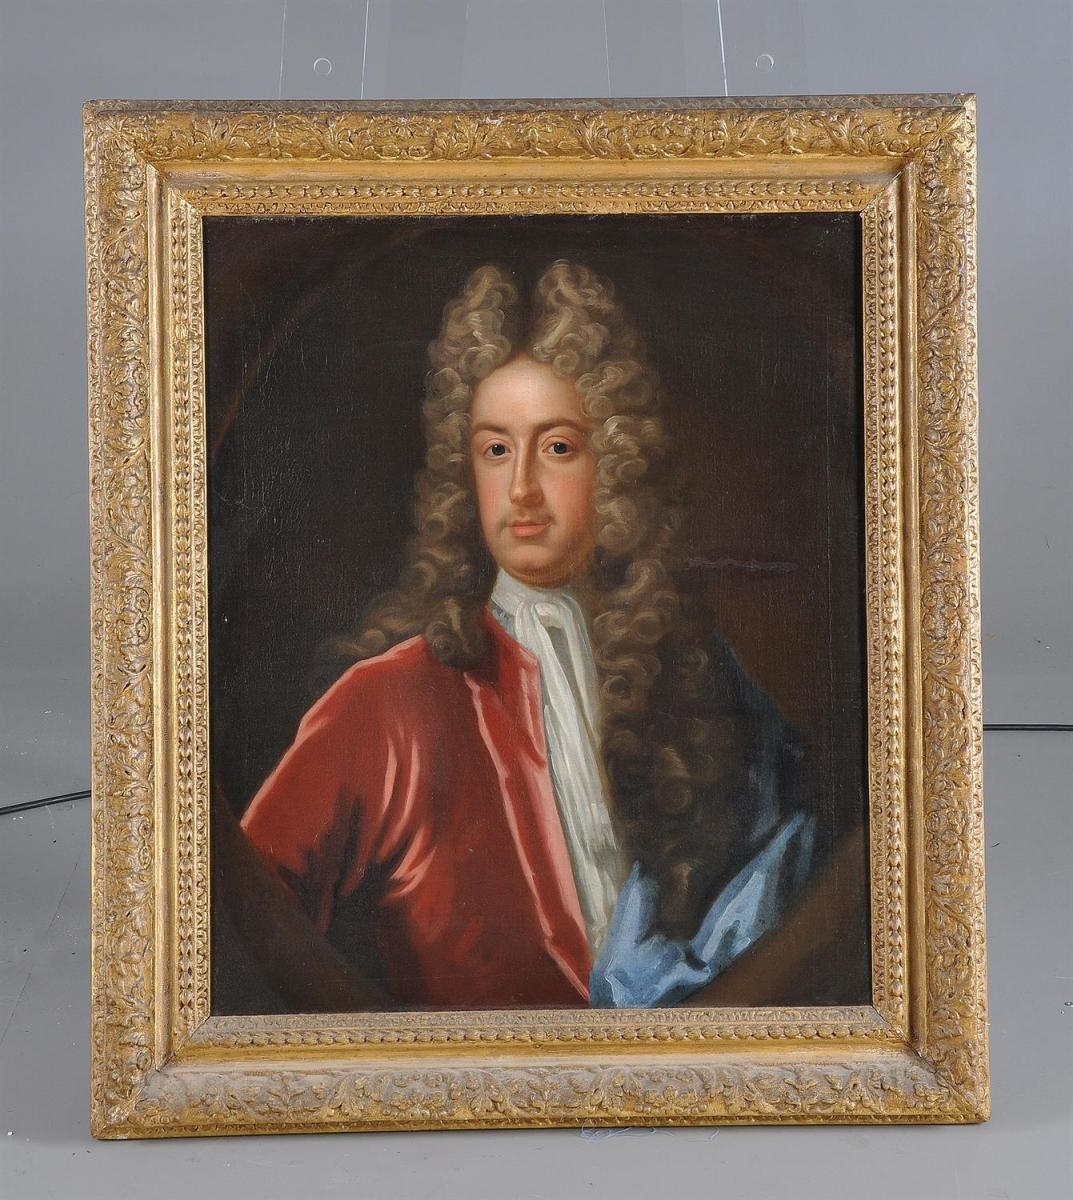 Artwork by Michael Dahl, A portrait of Sir John de Lannoy Coussmaker, Made of Oil on canvas